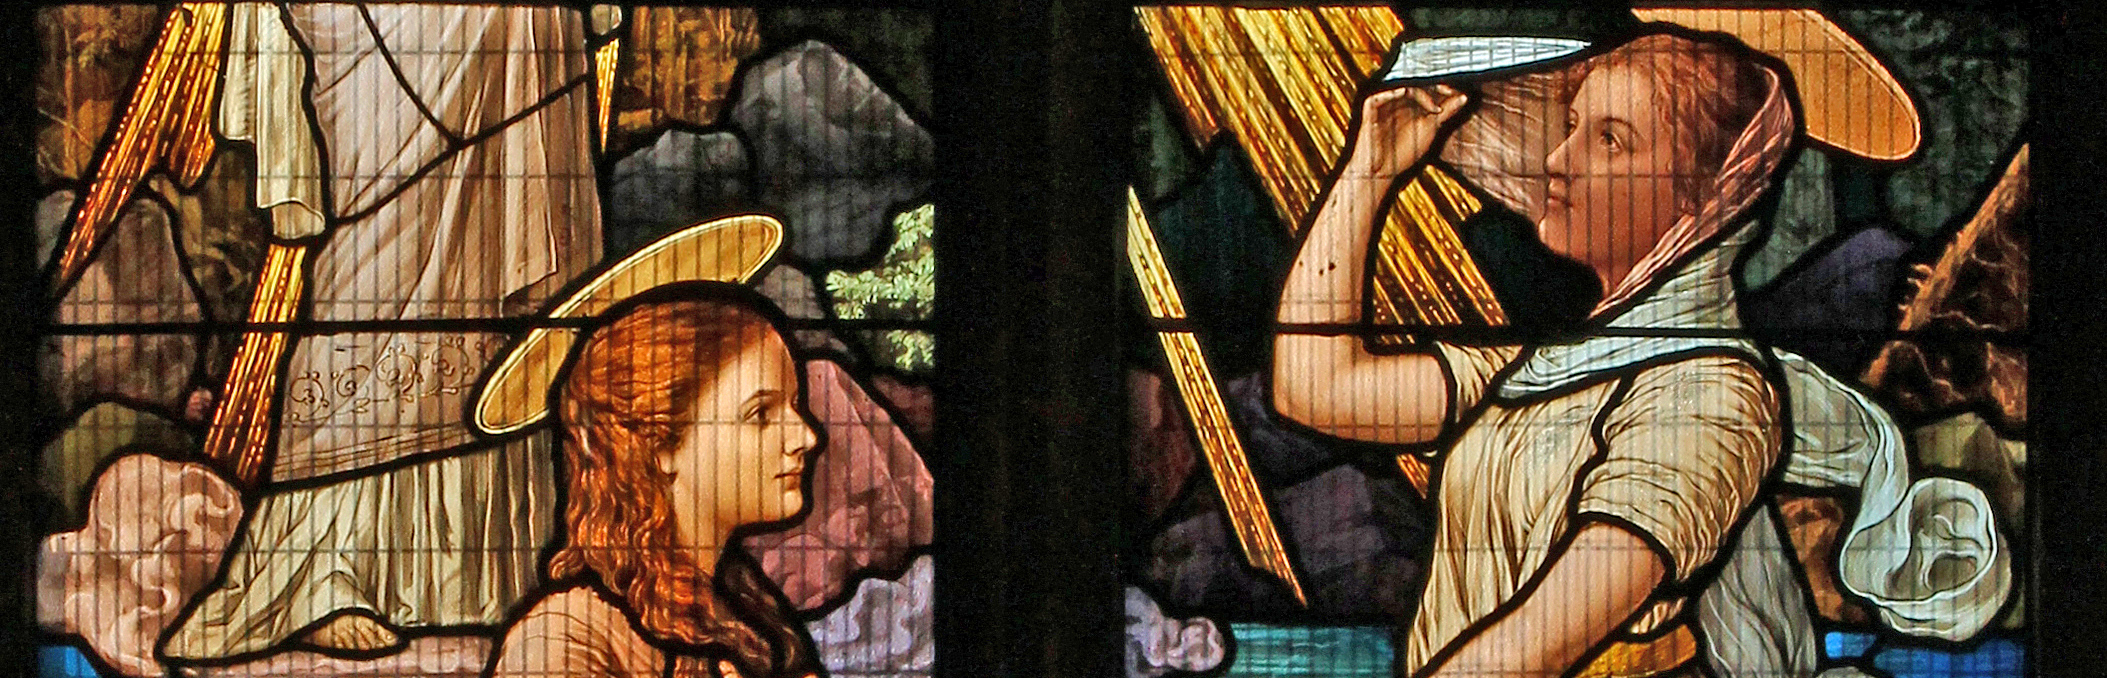 East window of Burnham Westgate church 